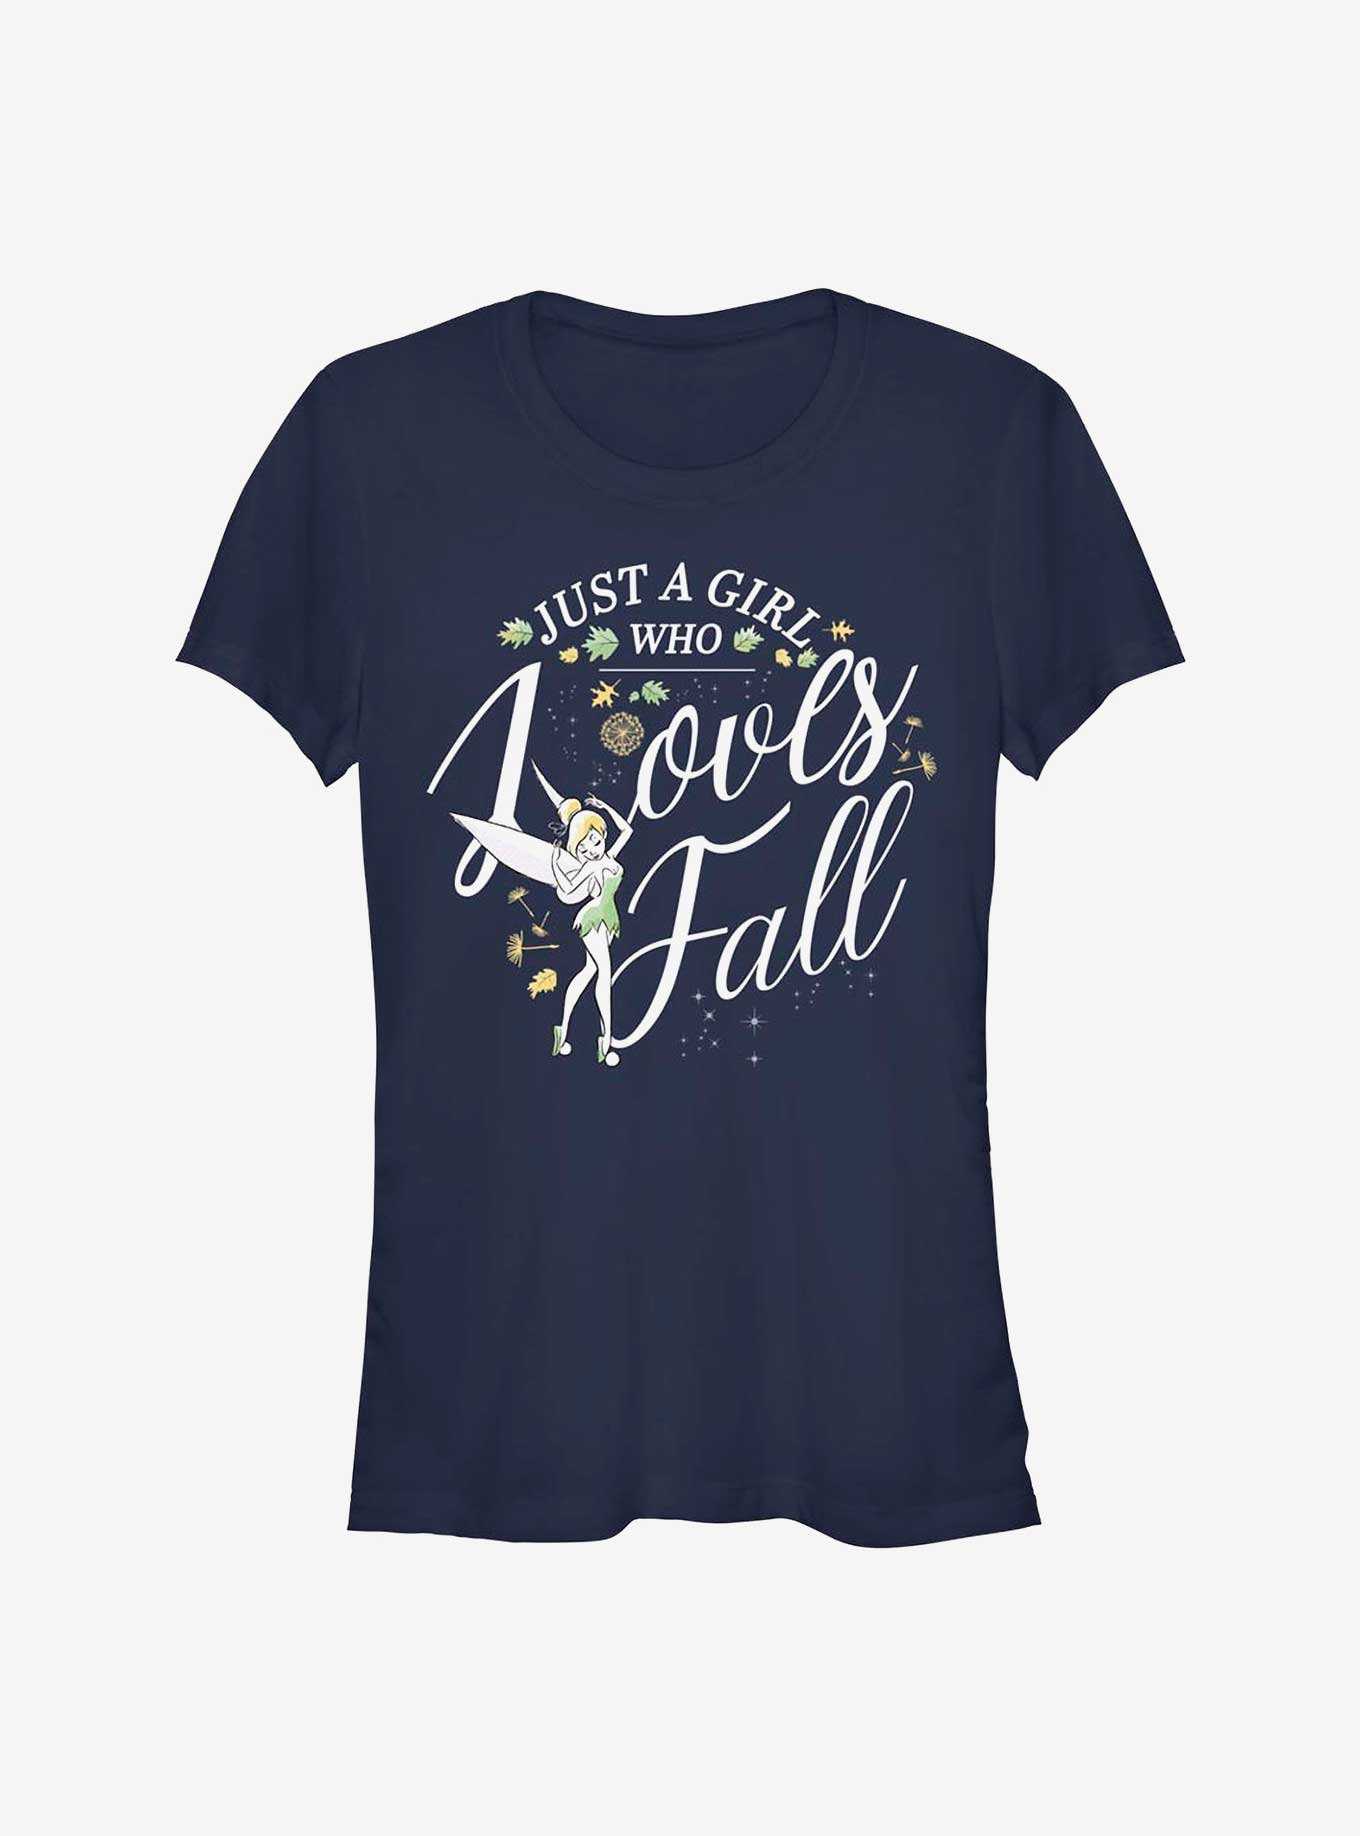 Disney Tinker Bell Tink Loves Fall Girls T-Shirt, , hi-res